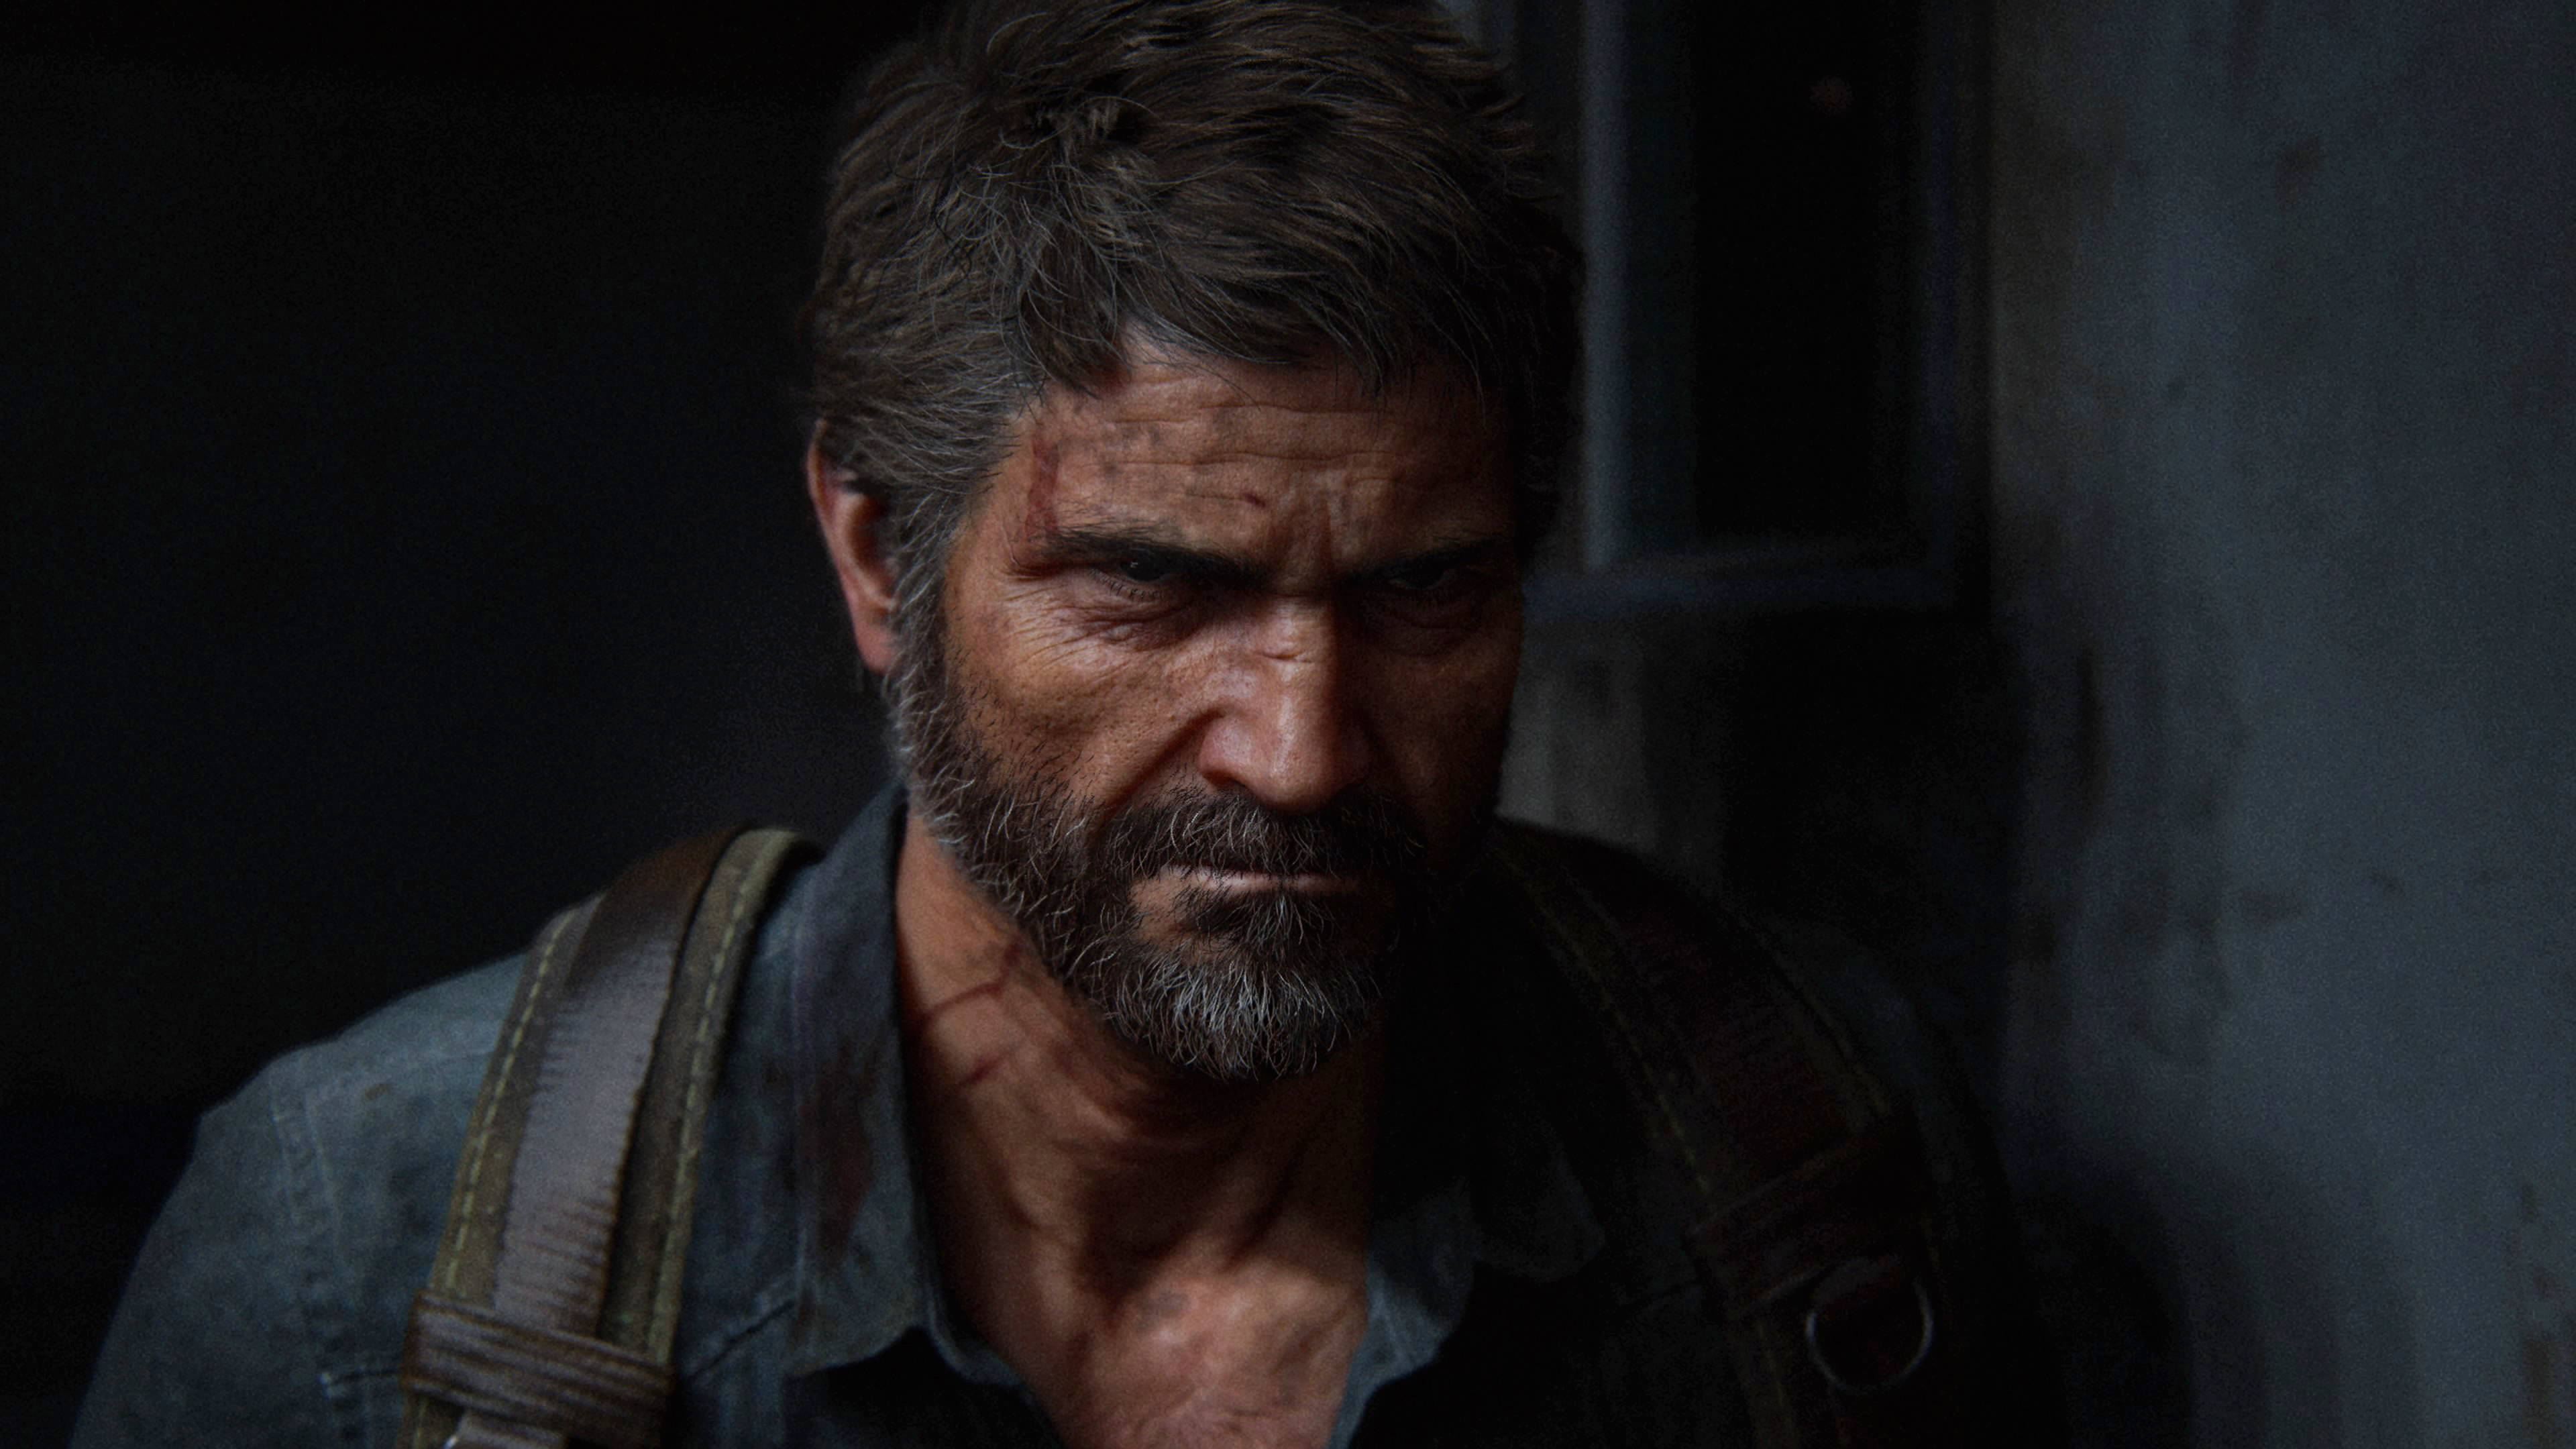 Joel - The Last of Us Part 2